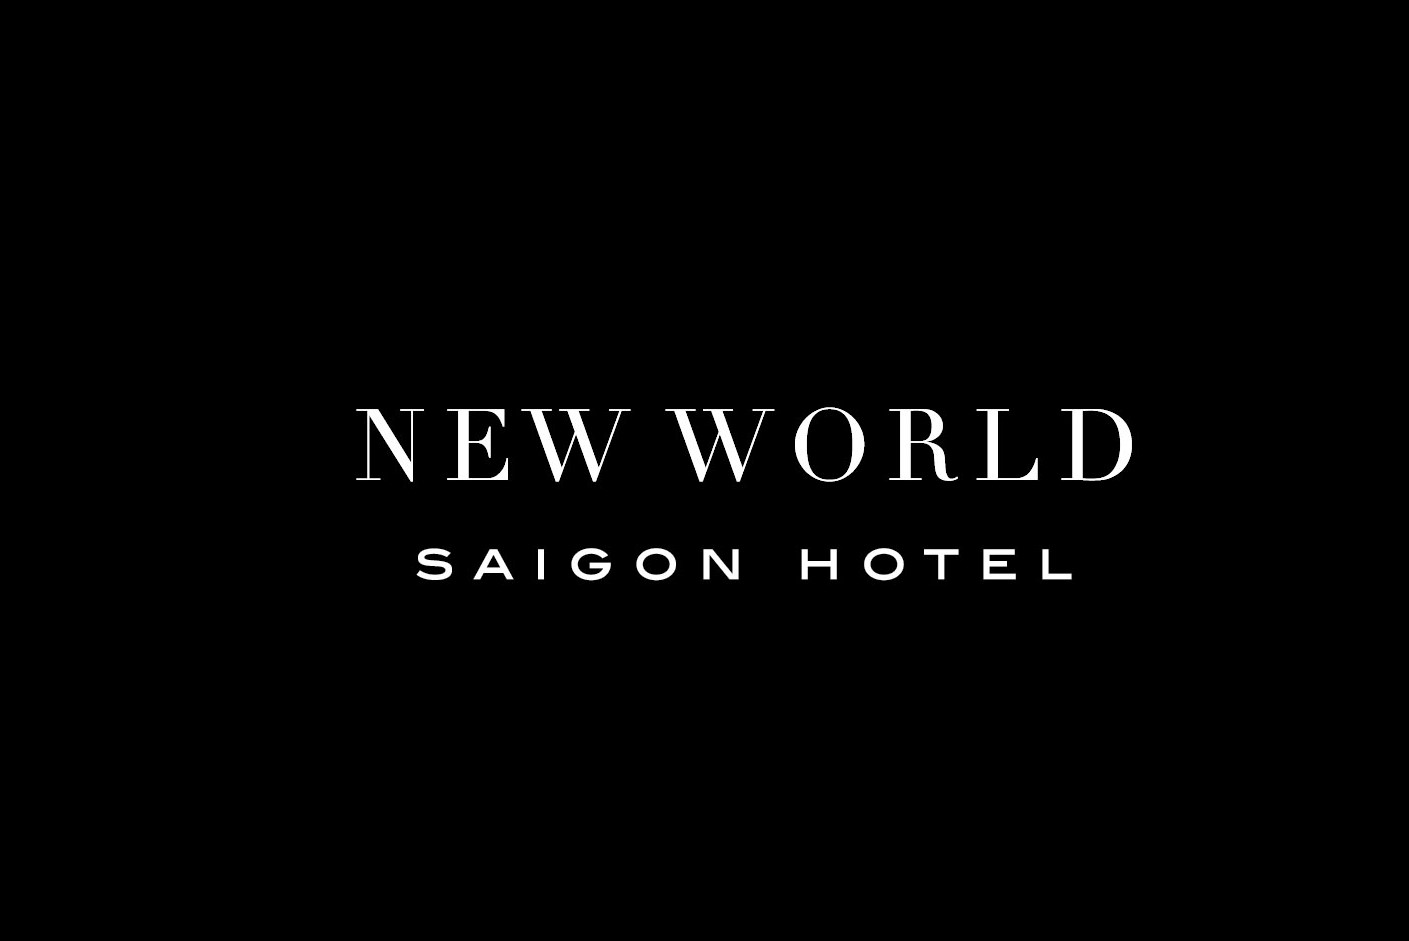 Official Hotel Partner – New World Saigon Hotel